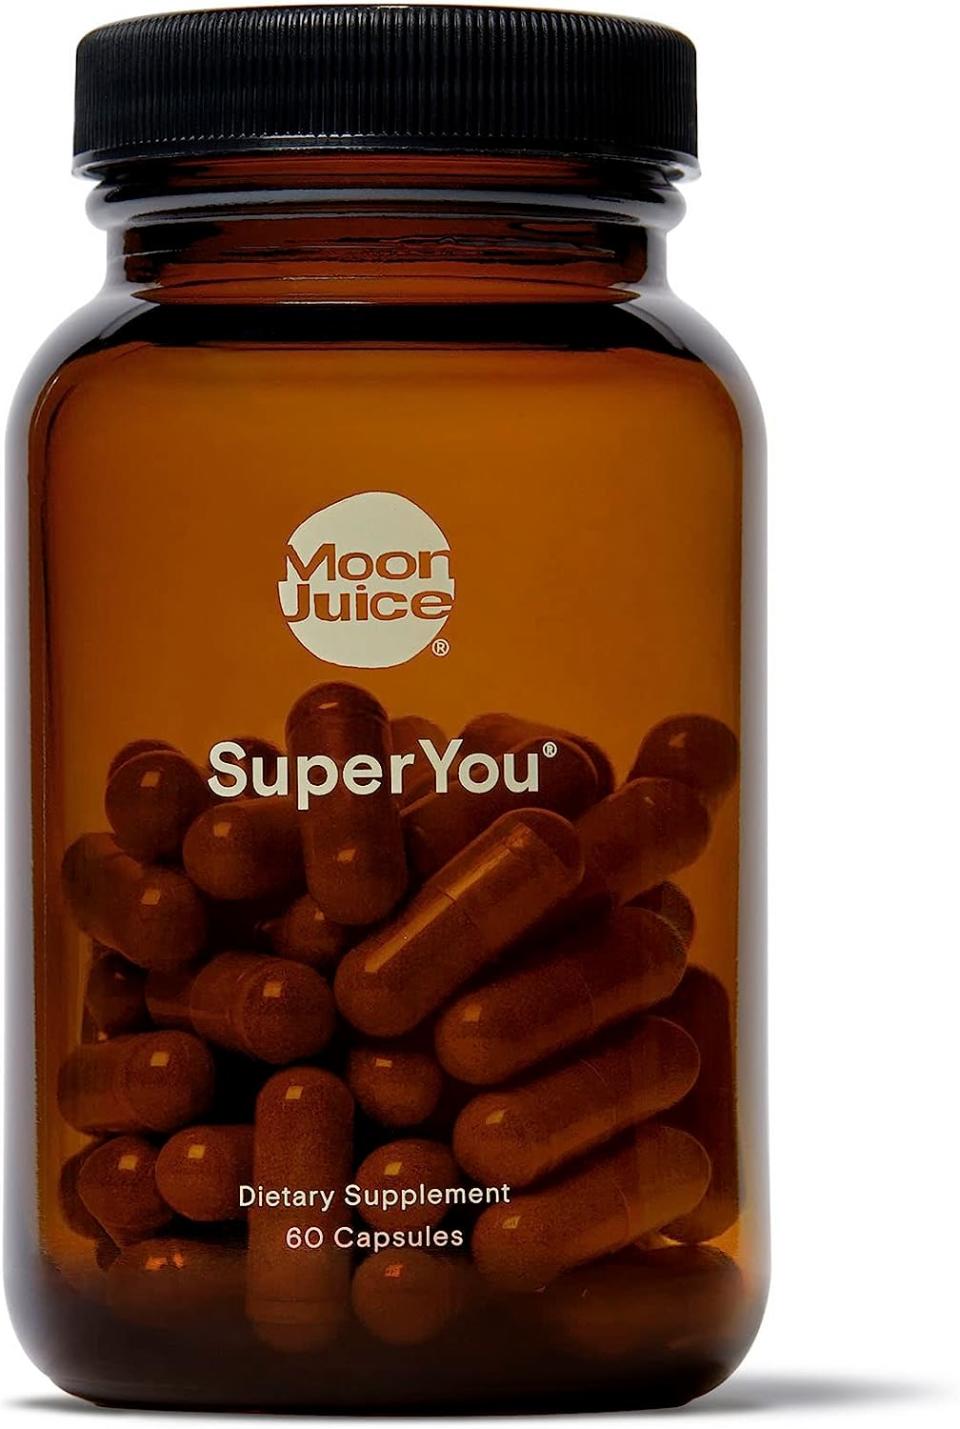 Moon Juice Super You Supplements